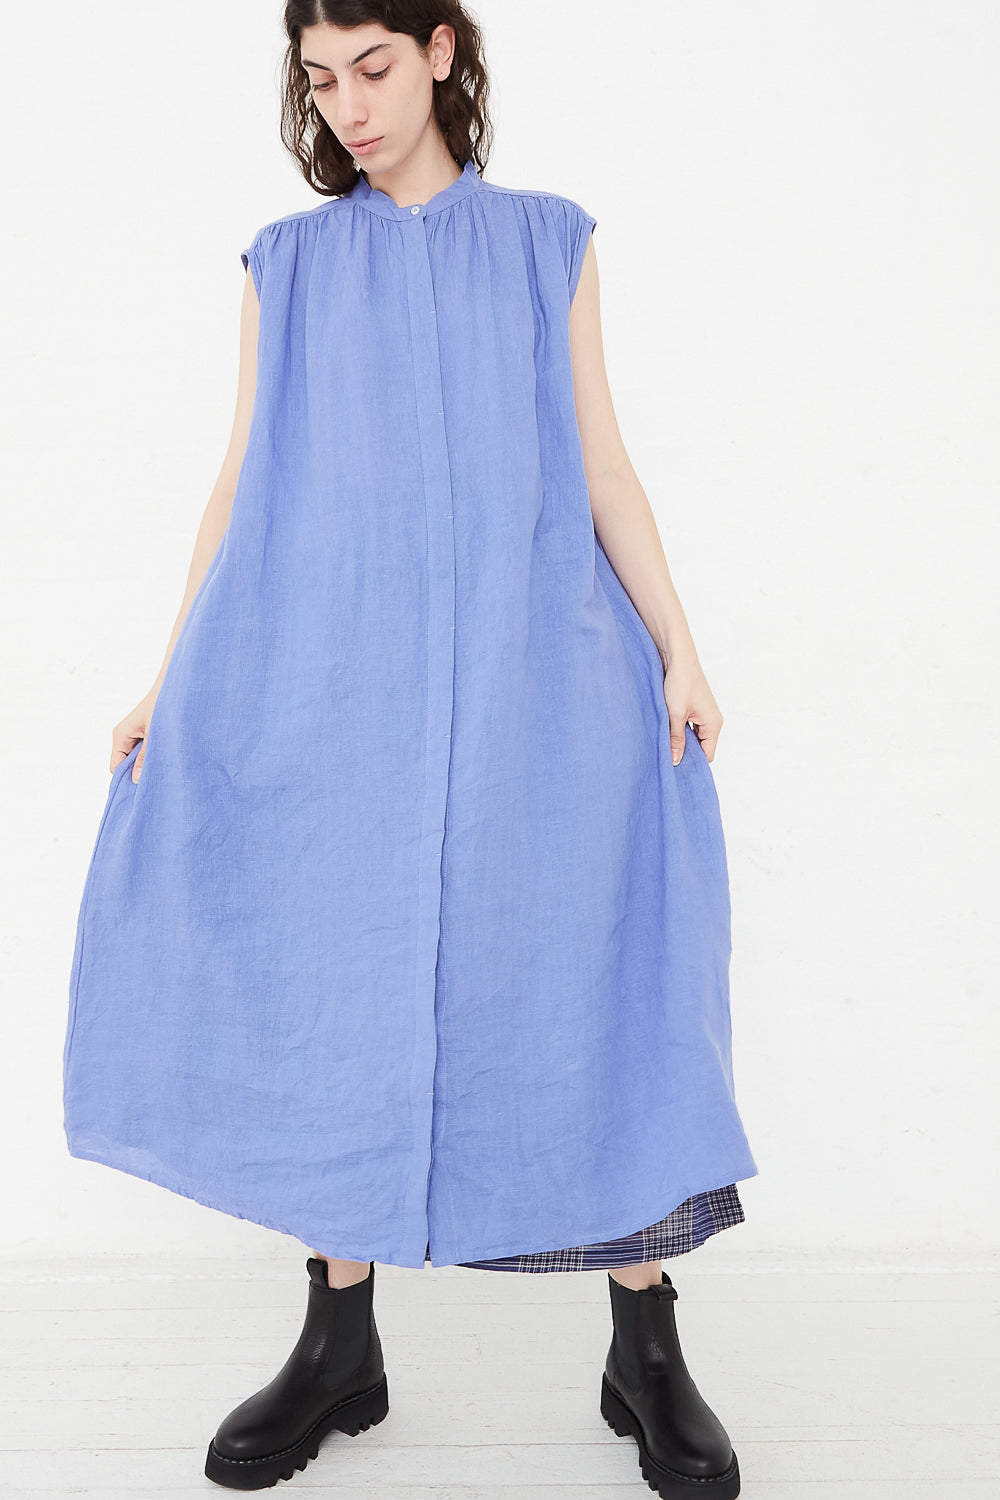 Ichi Linen Dress in Blue | Oroboro Store | New York, NY